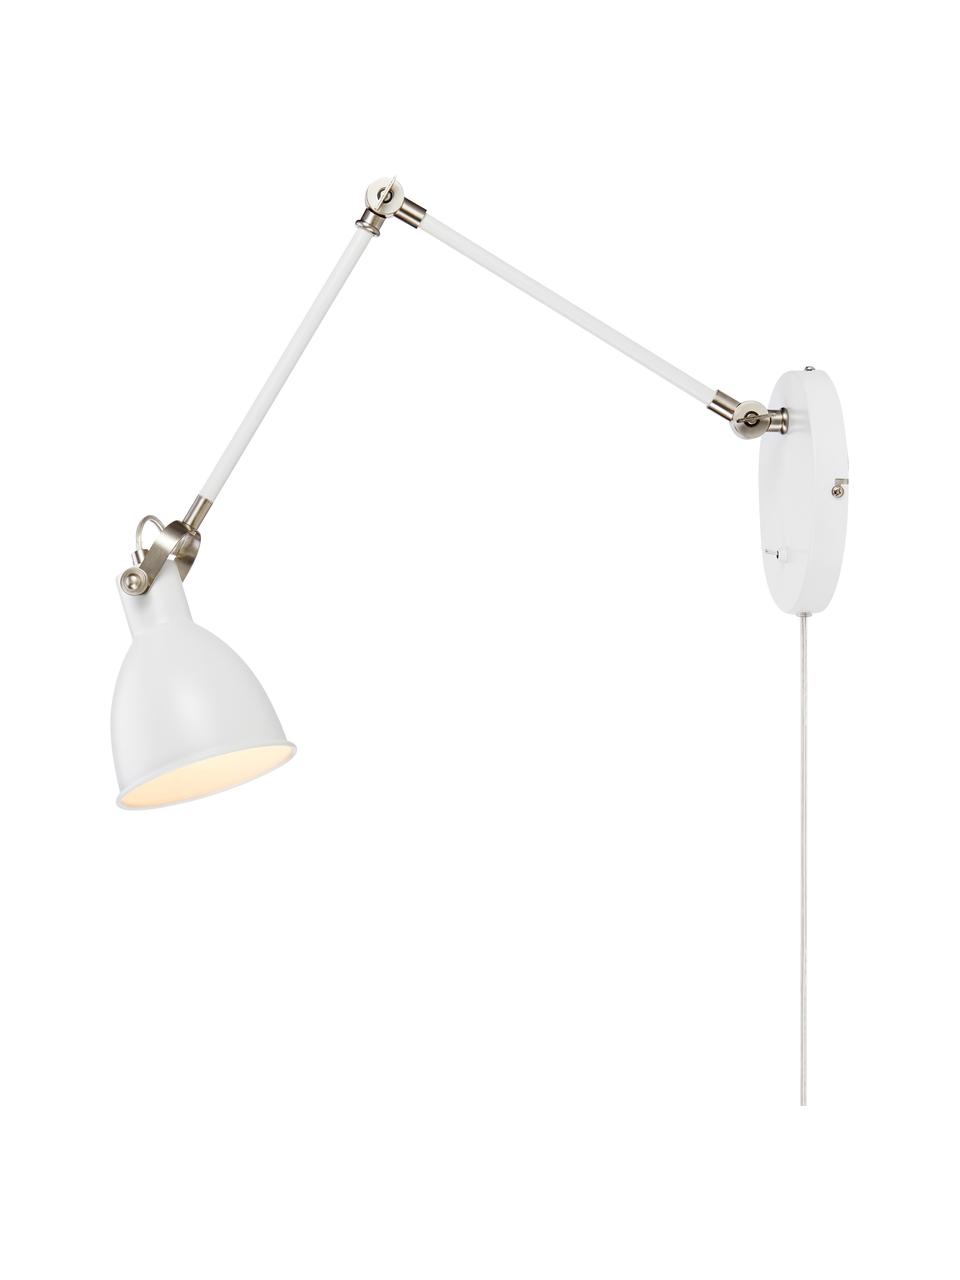 Verstelbare wandlamp House met stekker, Lampenkap: gecoat metaal, Wit, D 84 x H 18 cm